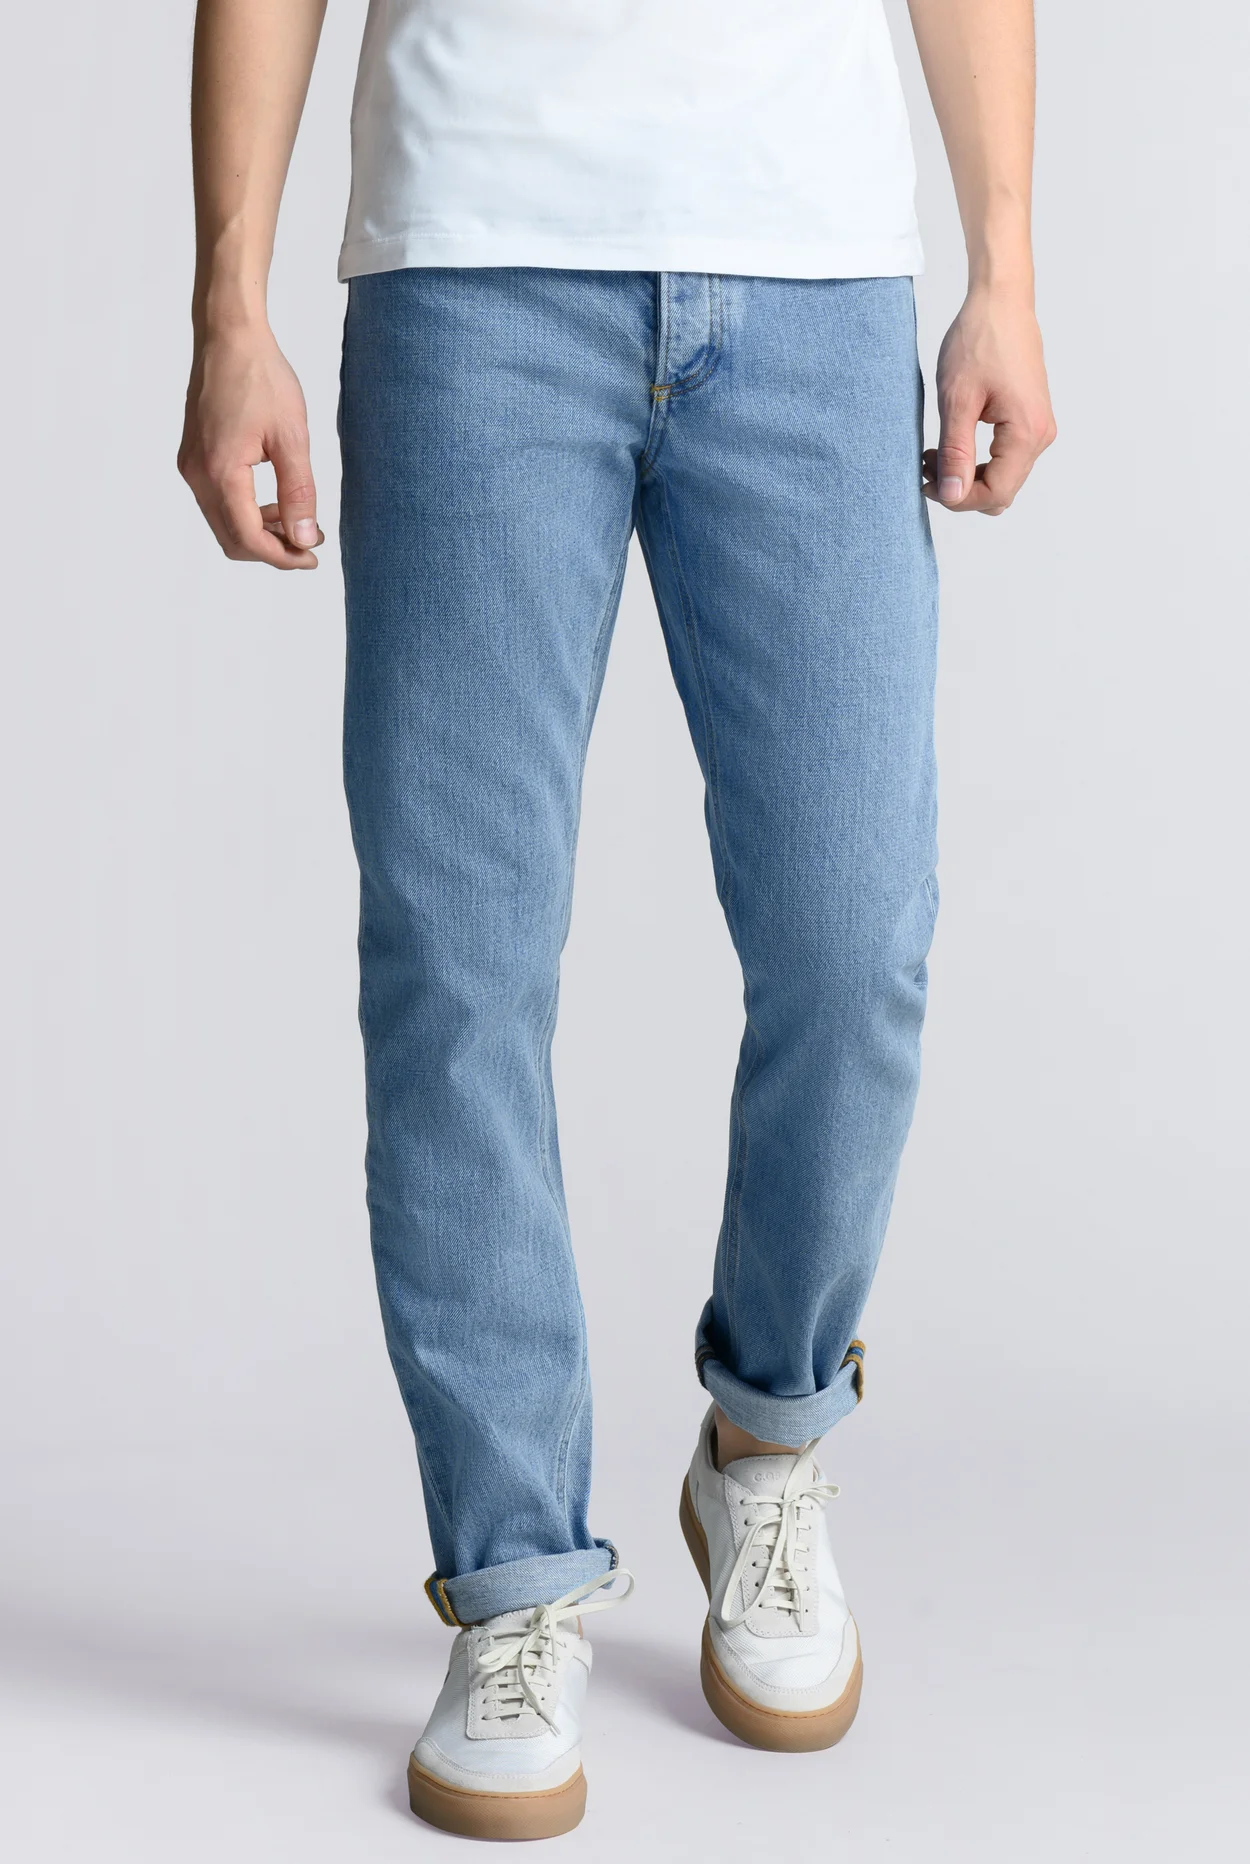 fange Halvkreds spray Stone Bleach Washed Denim Jeans | Italian 13oz Organic Cotton - ASKET